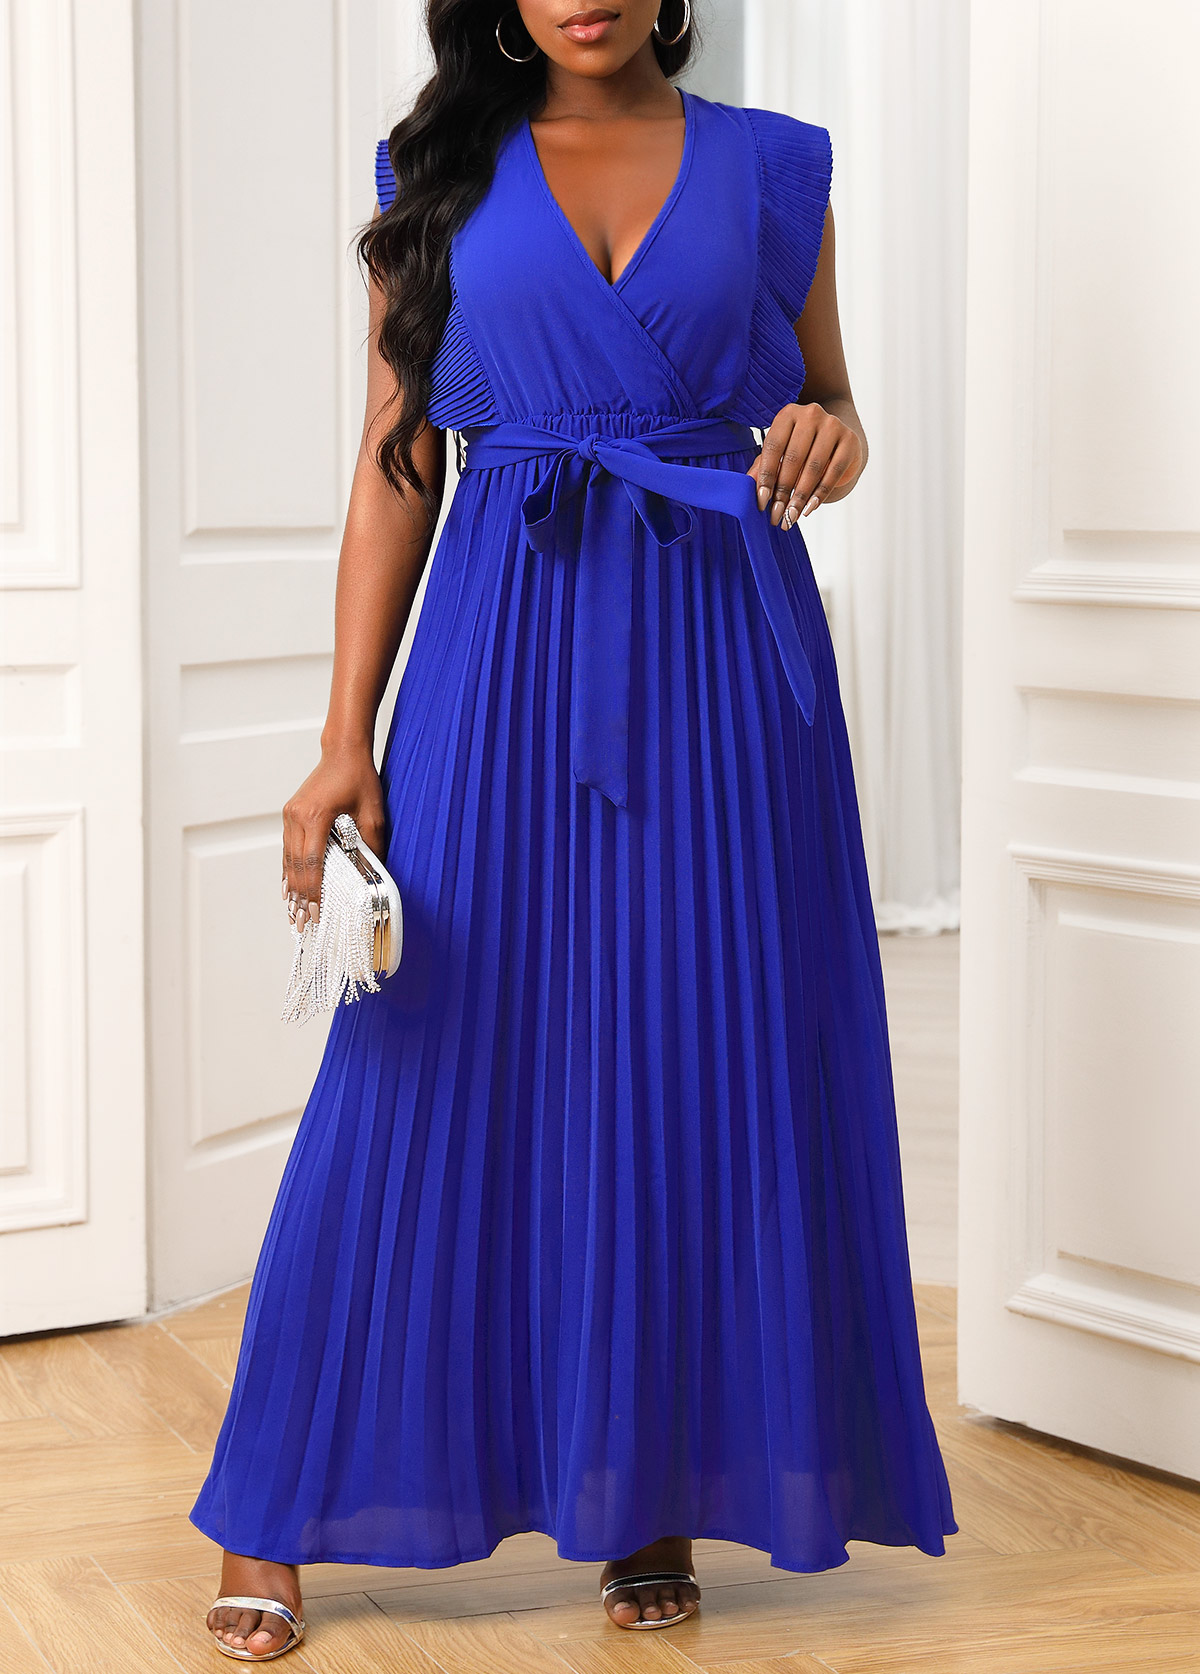 Ruffle Sleeve Belted Royal Blue Dress